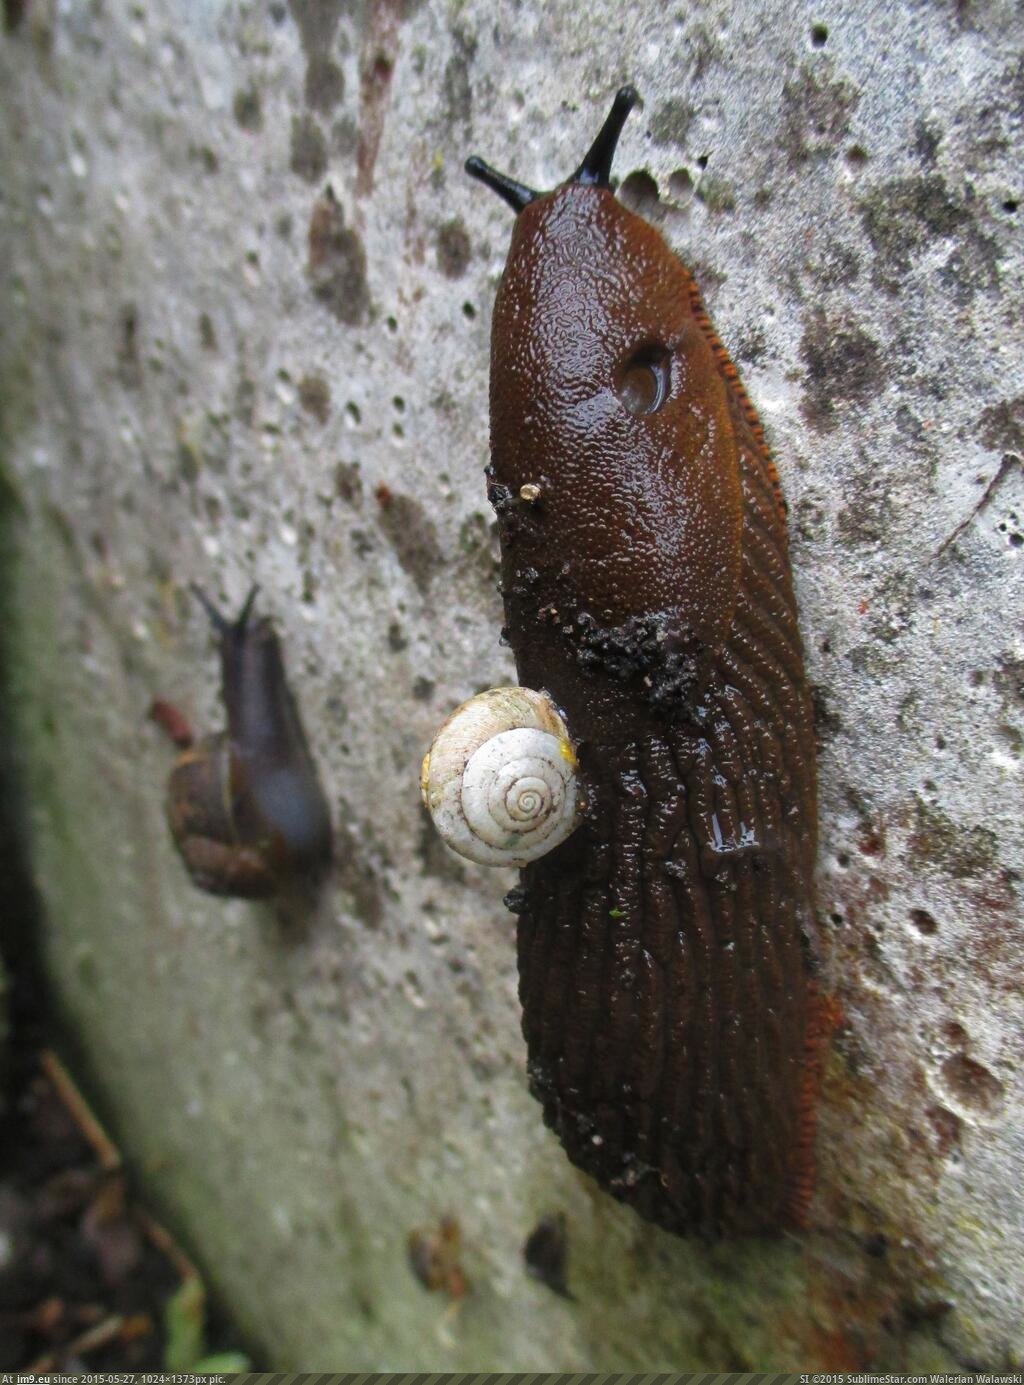 [Mildlyinteresting] A large slug wearing a tiny snail's shell on its back (in My r/MILDLYINTERESTING favs)